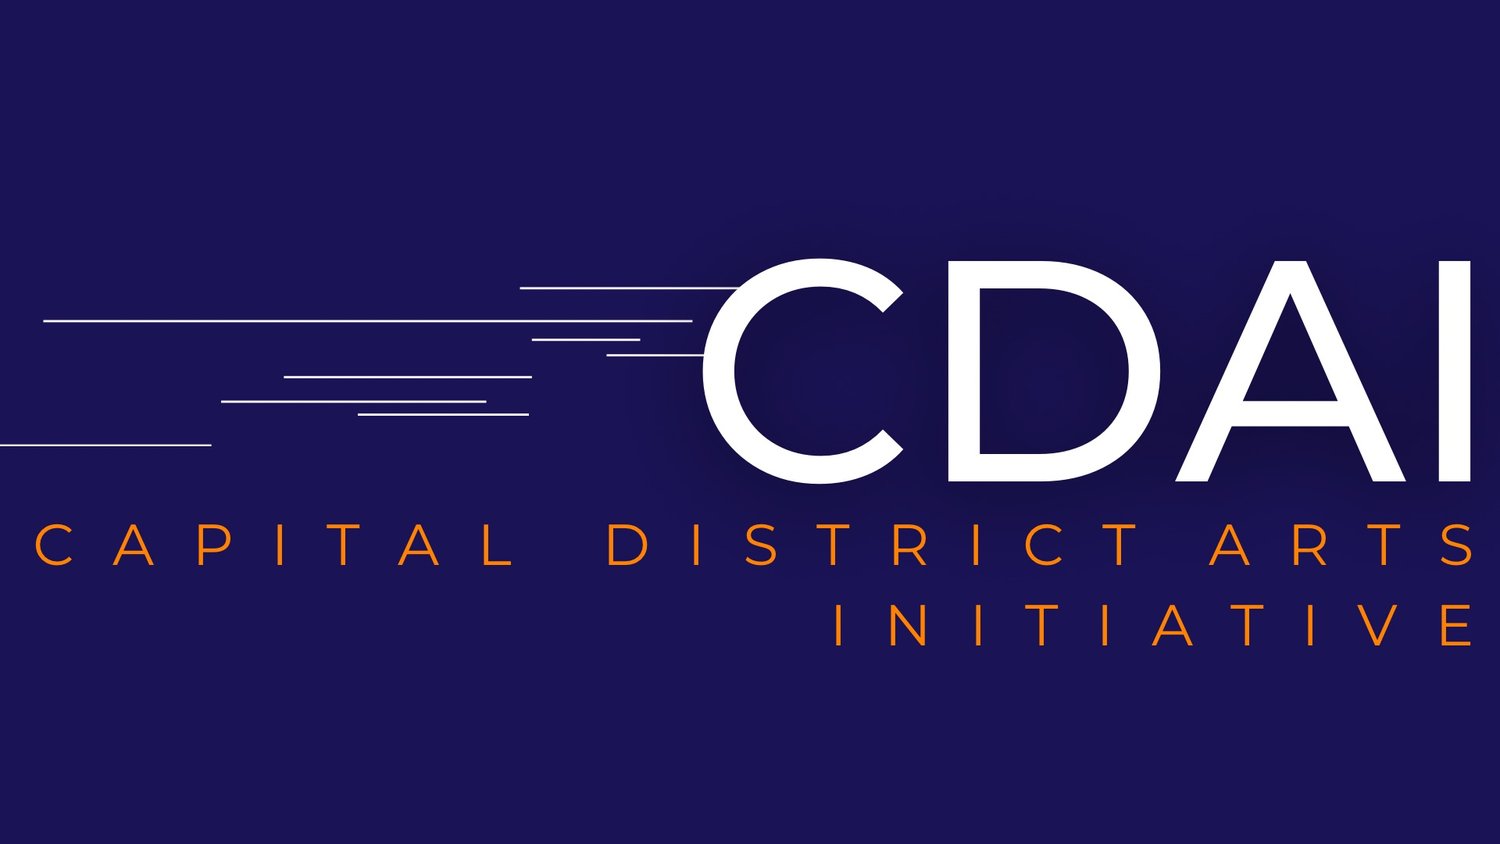 Capital District Arts Initiative 